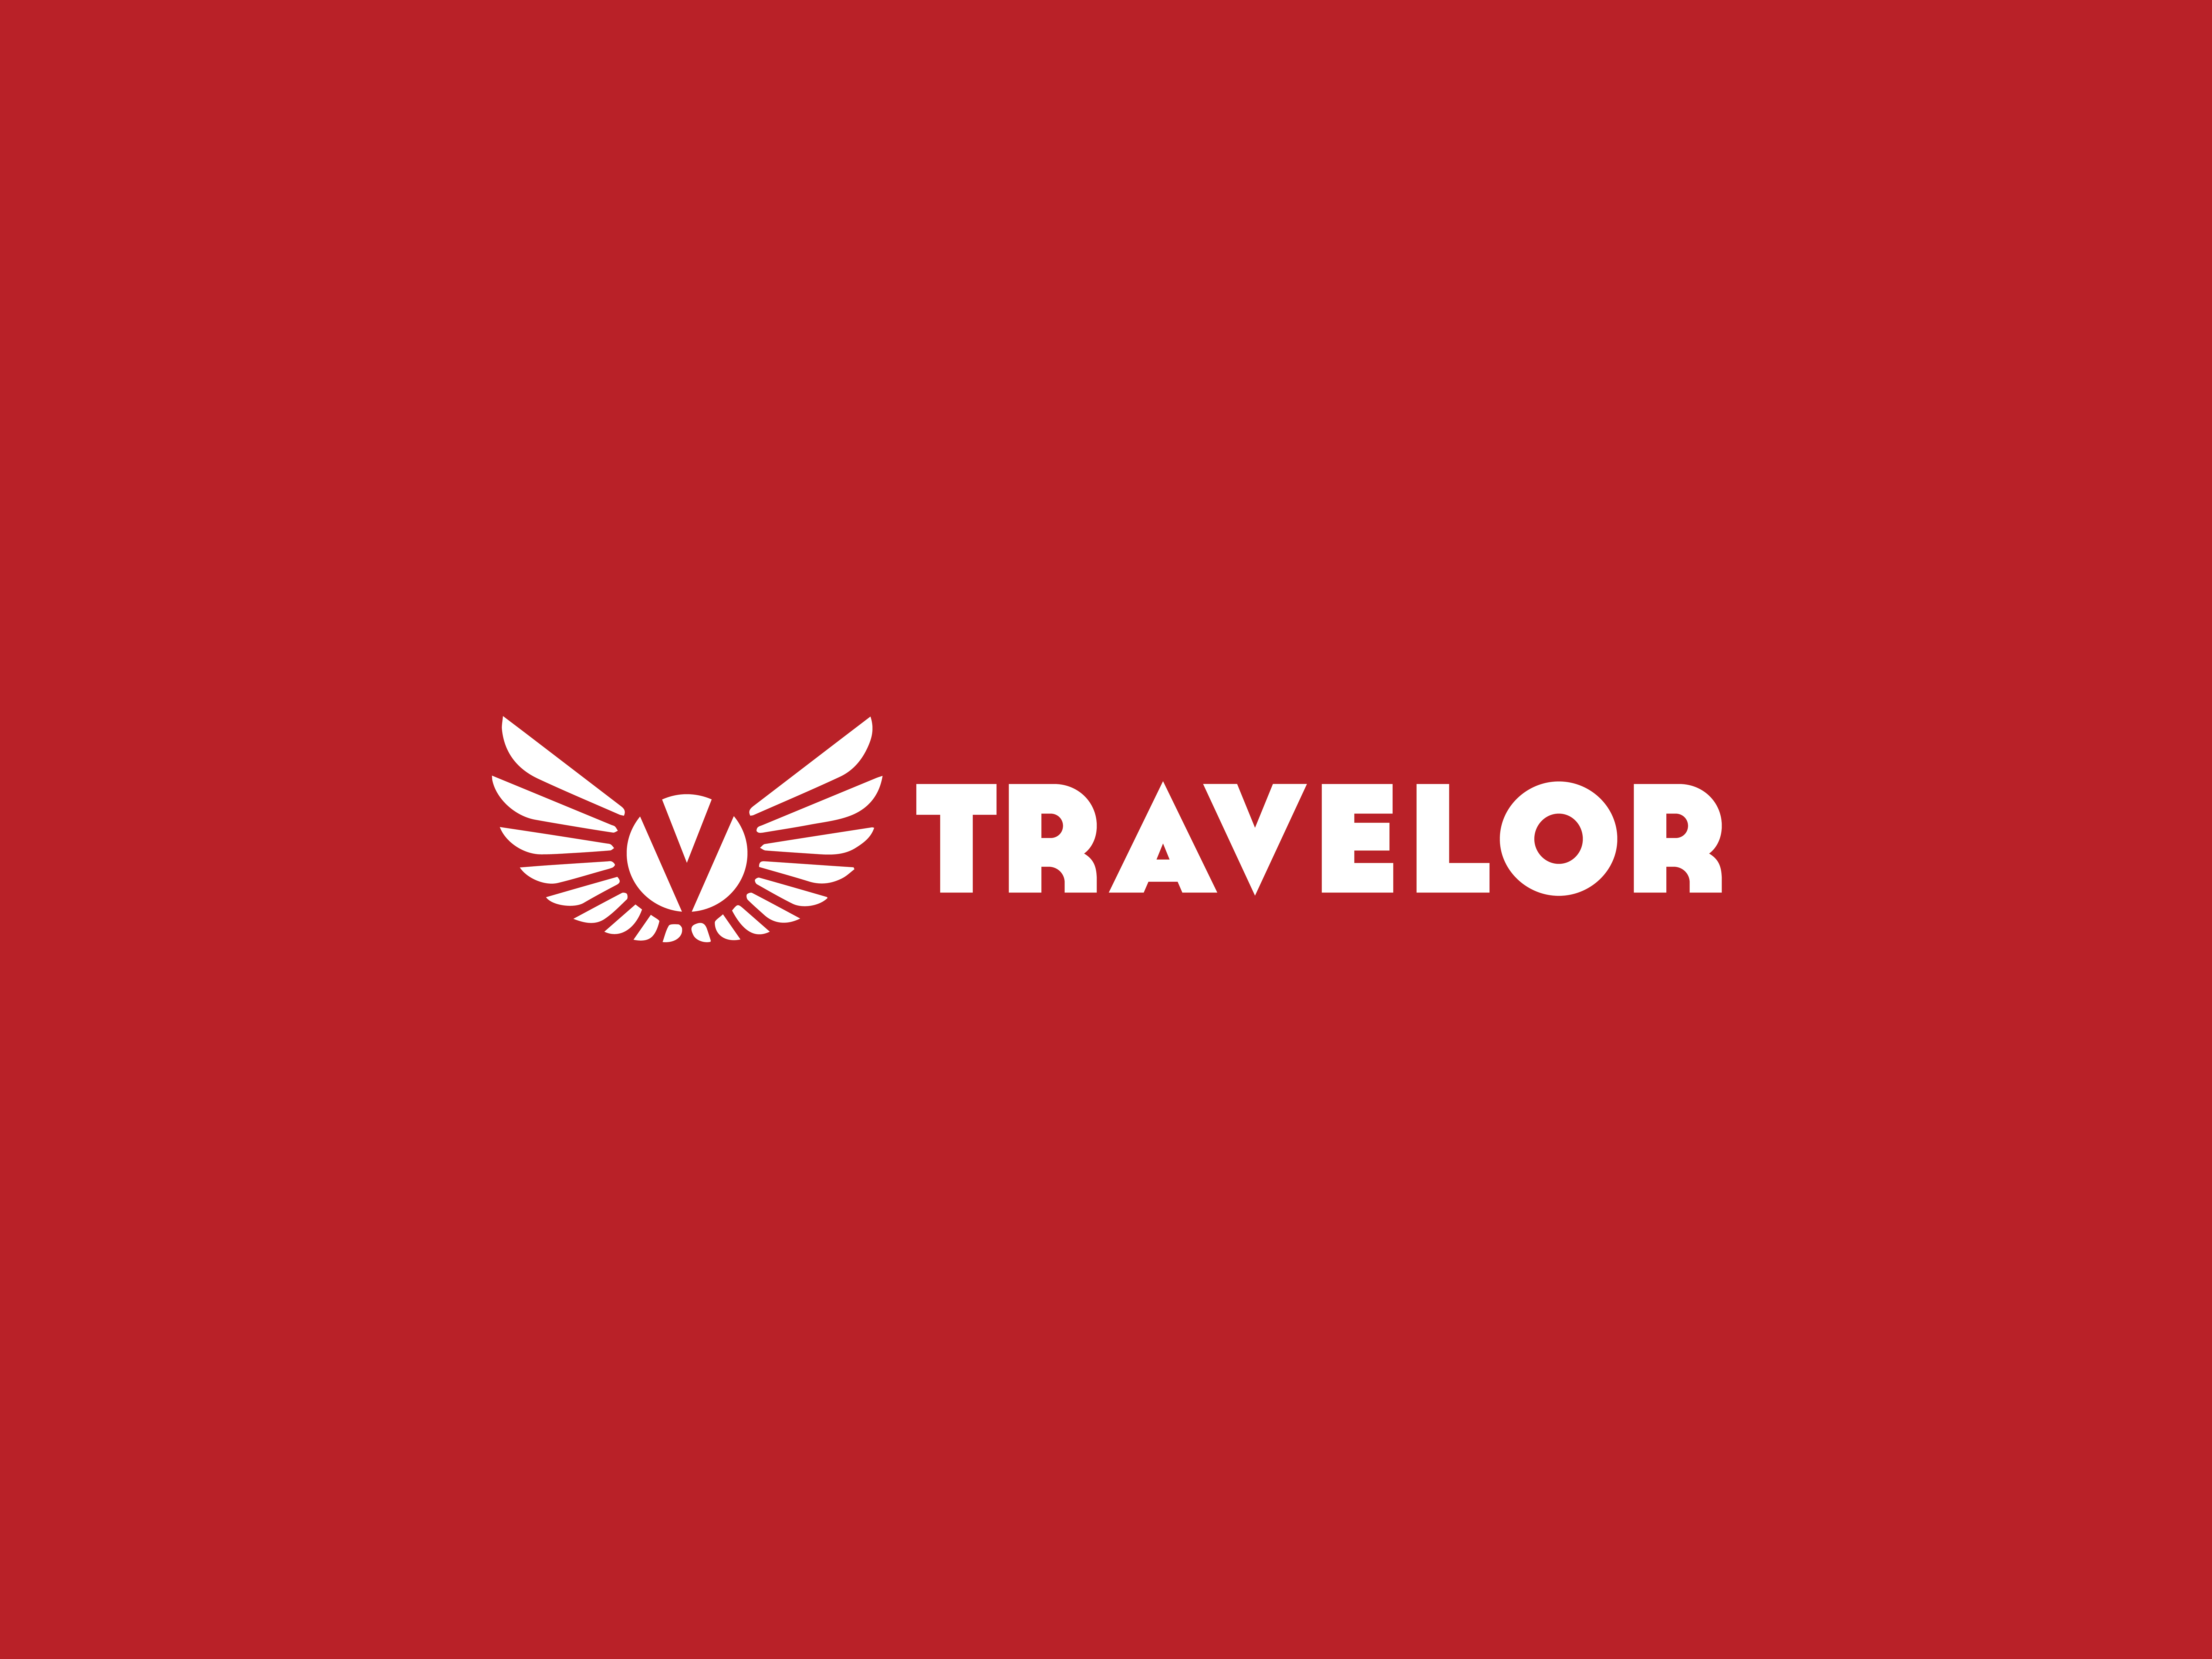 TRAVELOR logo